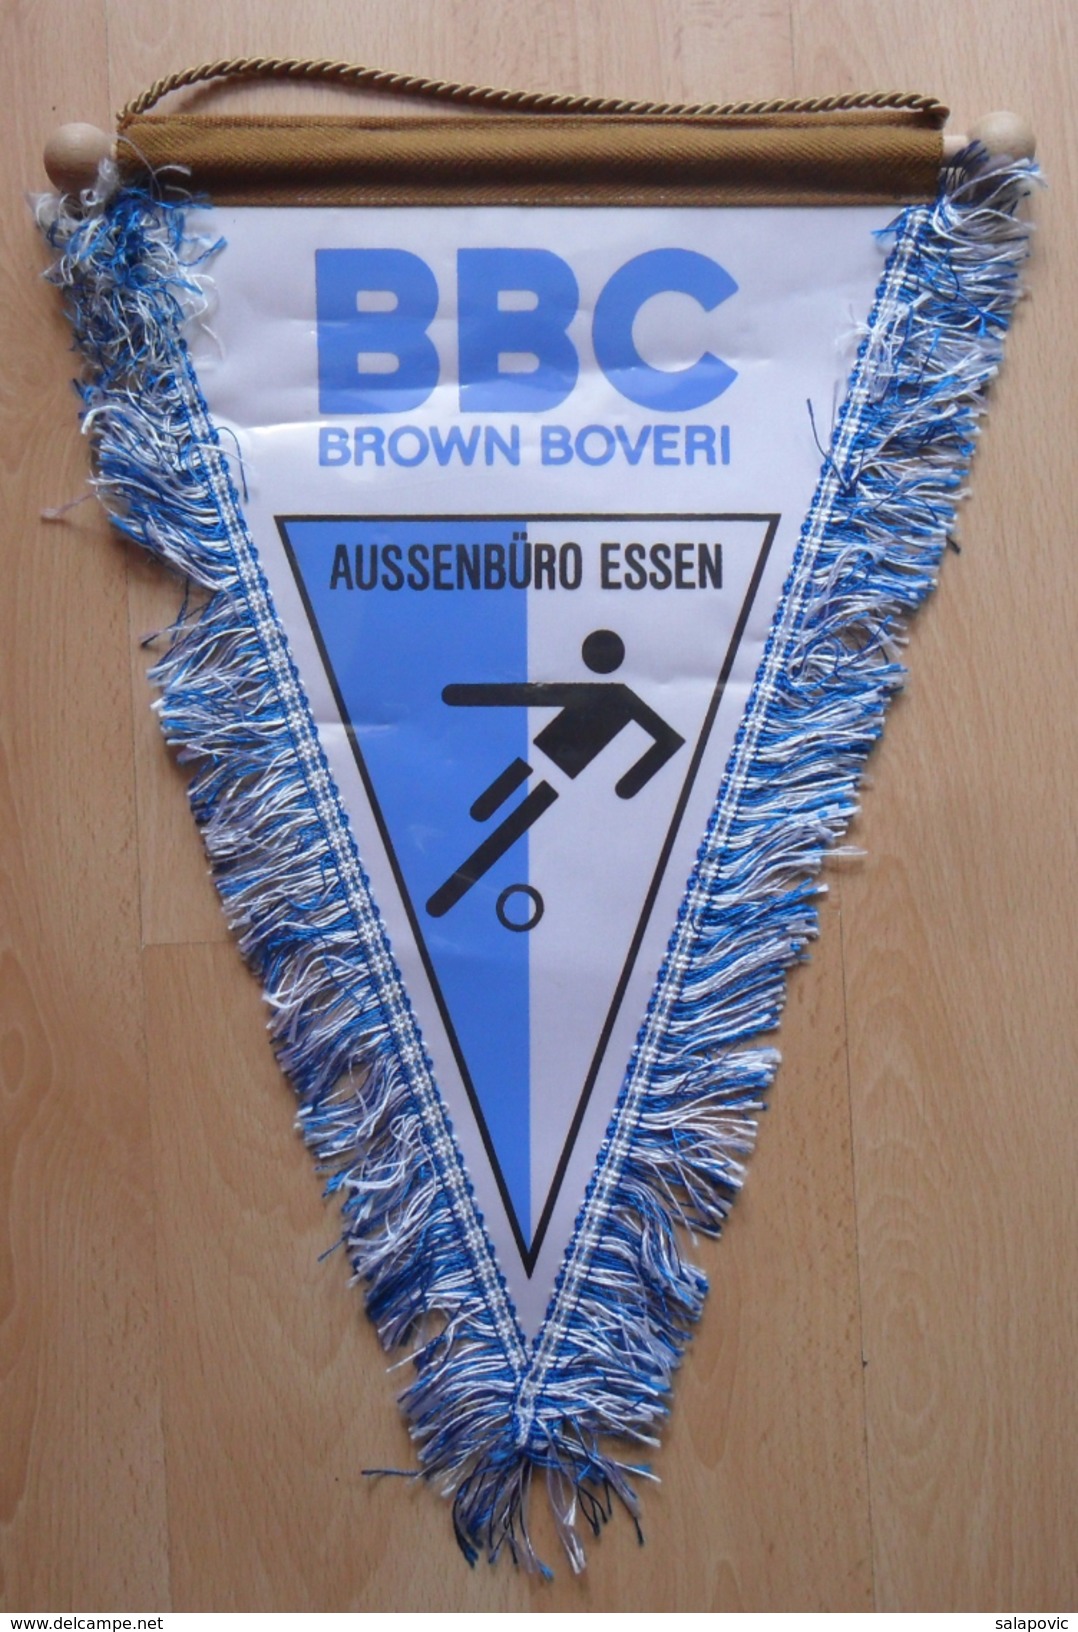 BBC BROWN BOVERI AUSSENBURO ESSEN  GERMANY  FOOTBALL CLUB, SOCCER / FUTBOL / CALCIO, OLD PENNANT, SPORTS FLAG - Habillement, Souvenirs & Autres